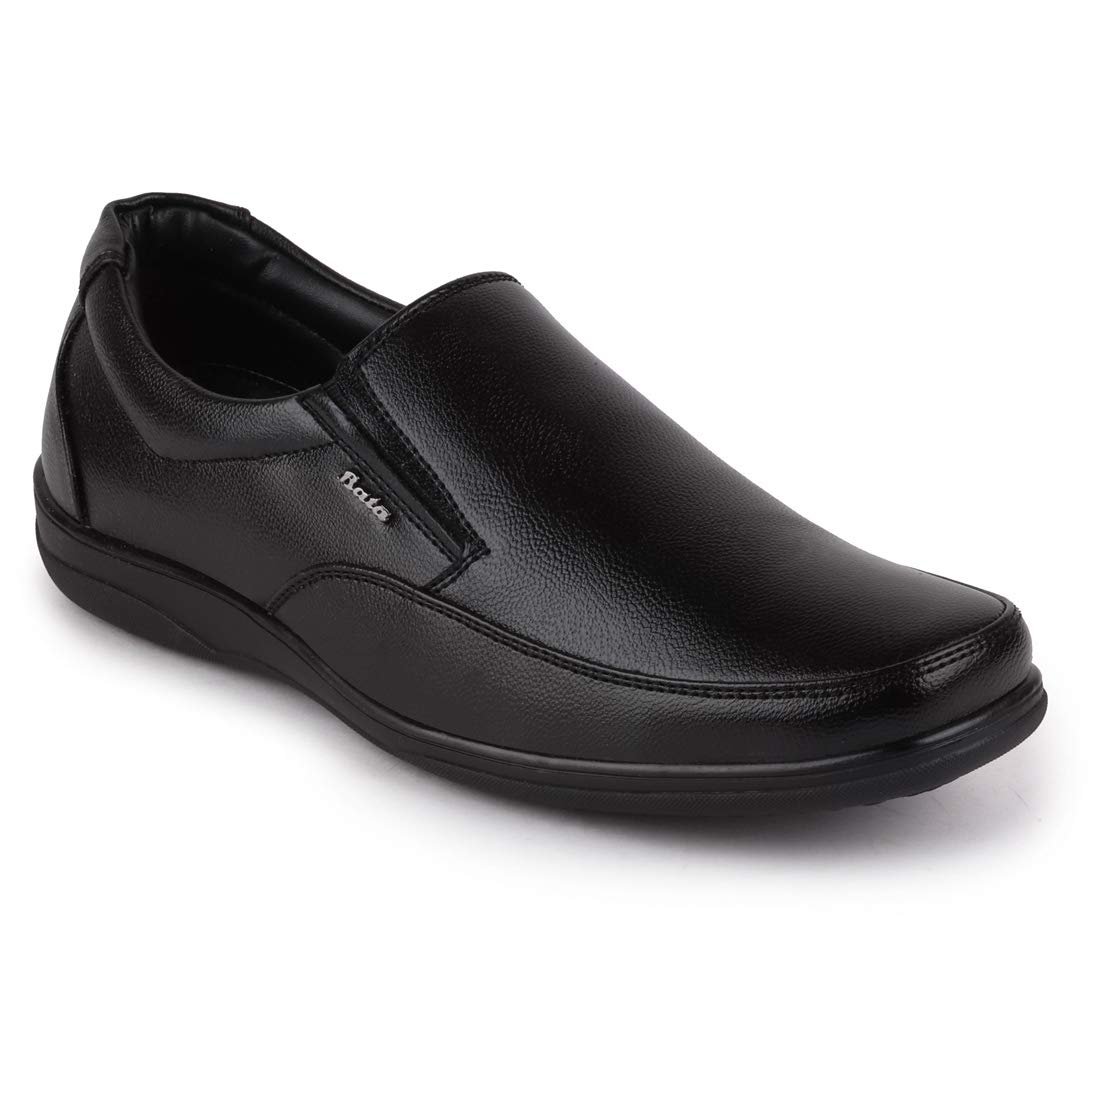 bata shoes formal black shoes